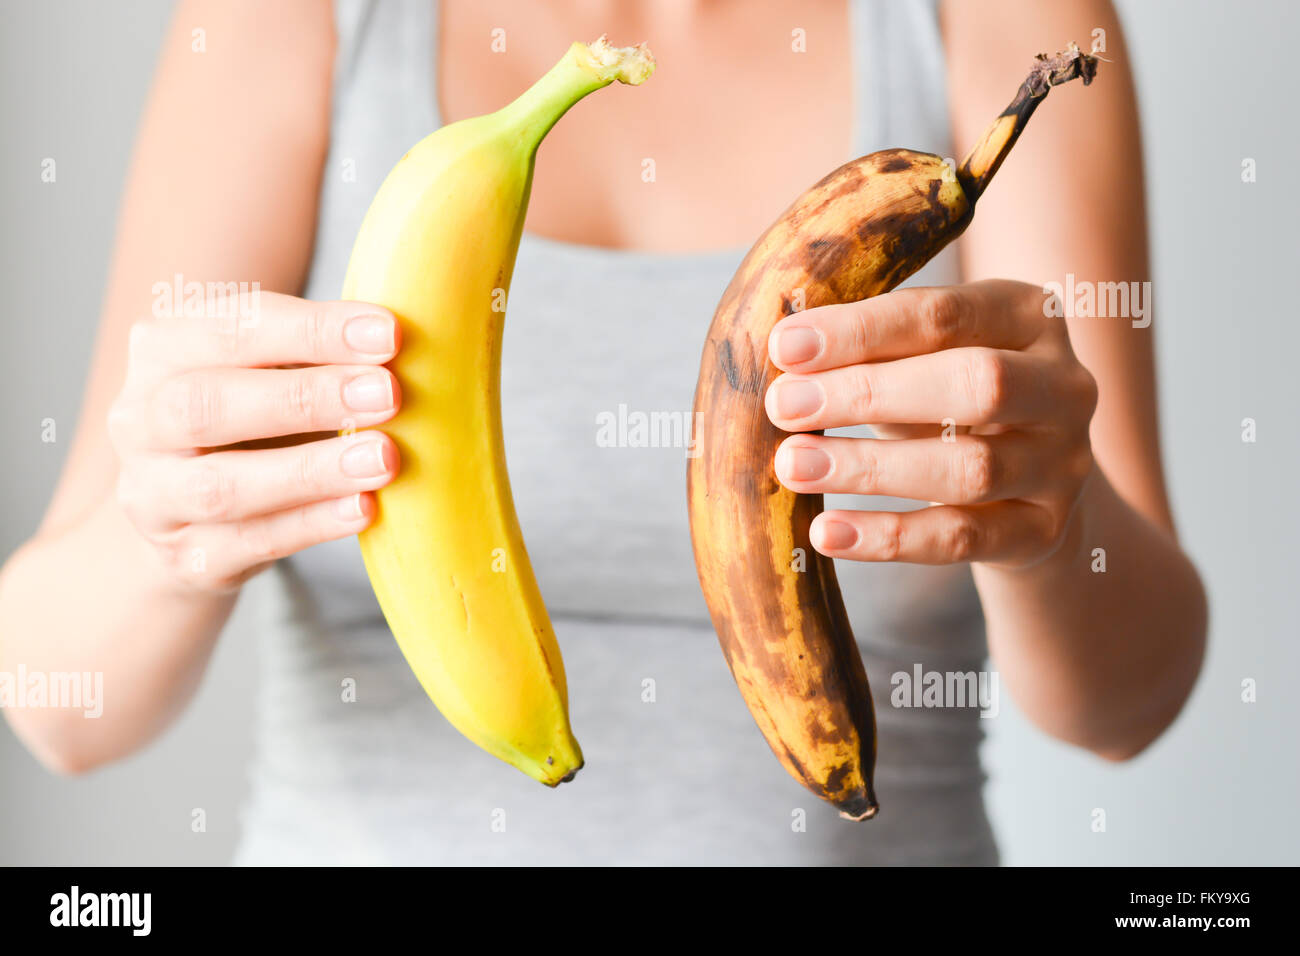 Fresh and overripe bananas on woman hand Stock Photo